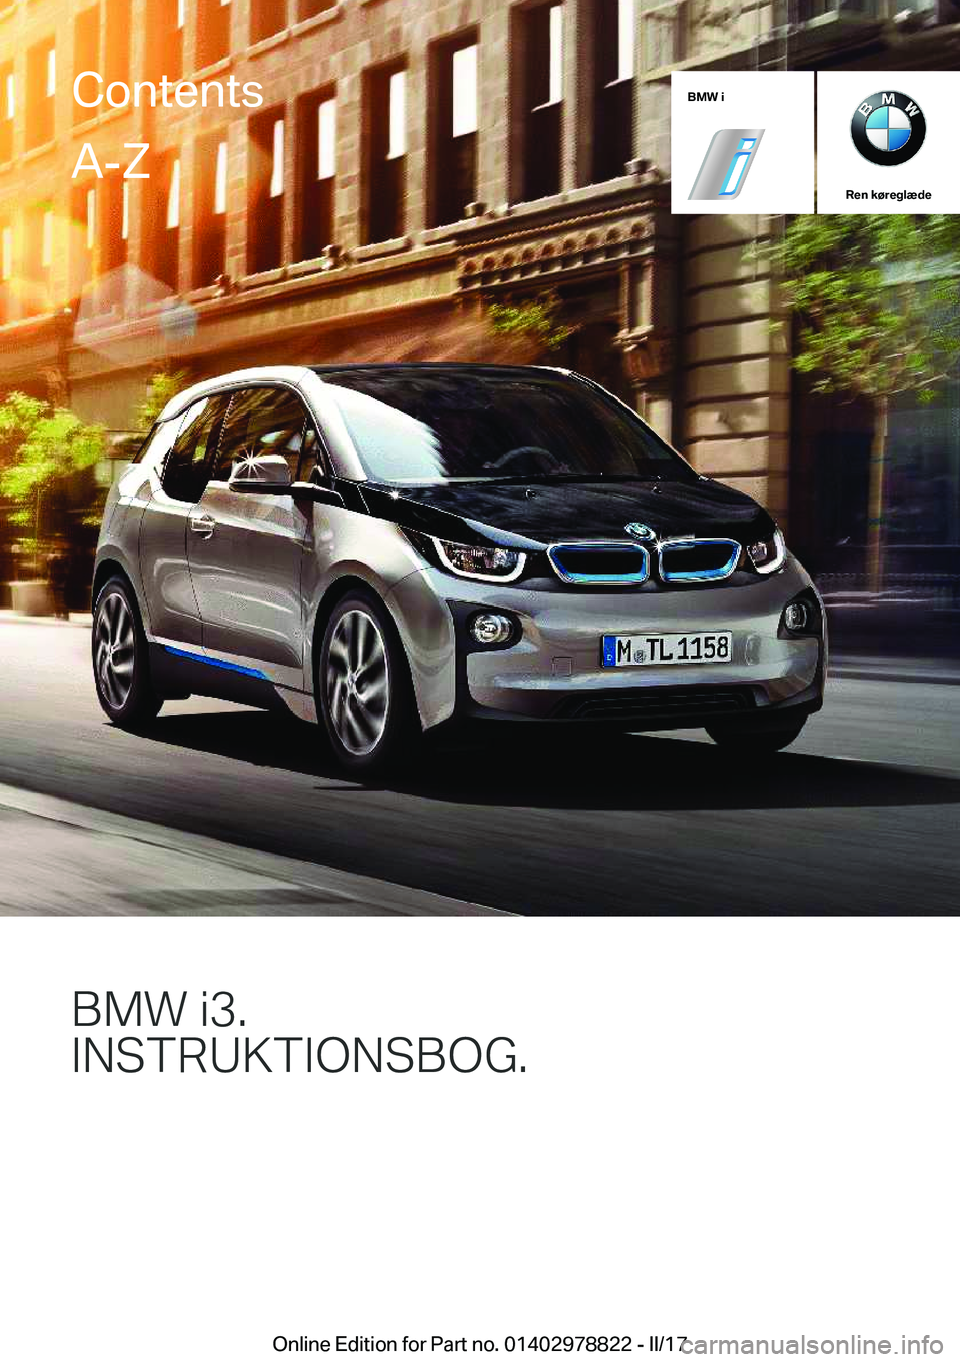 BMW I3 2017  InstruktionsbØger (in Danish) �B�M�W��i
�R�e�n��k�